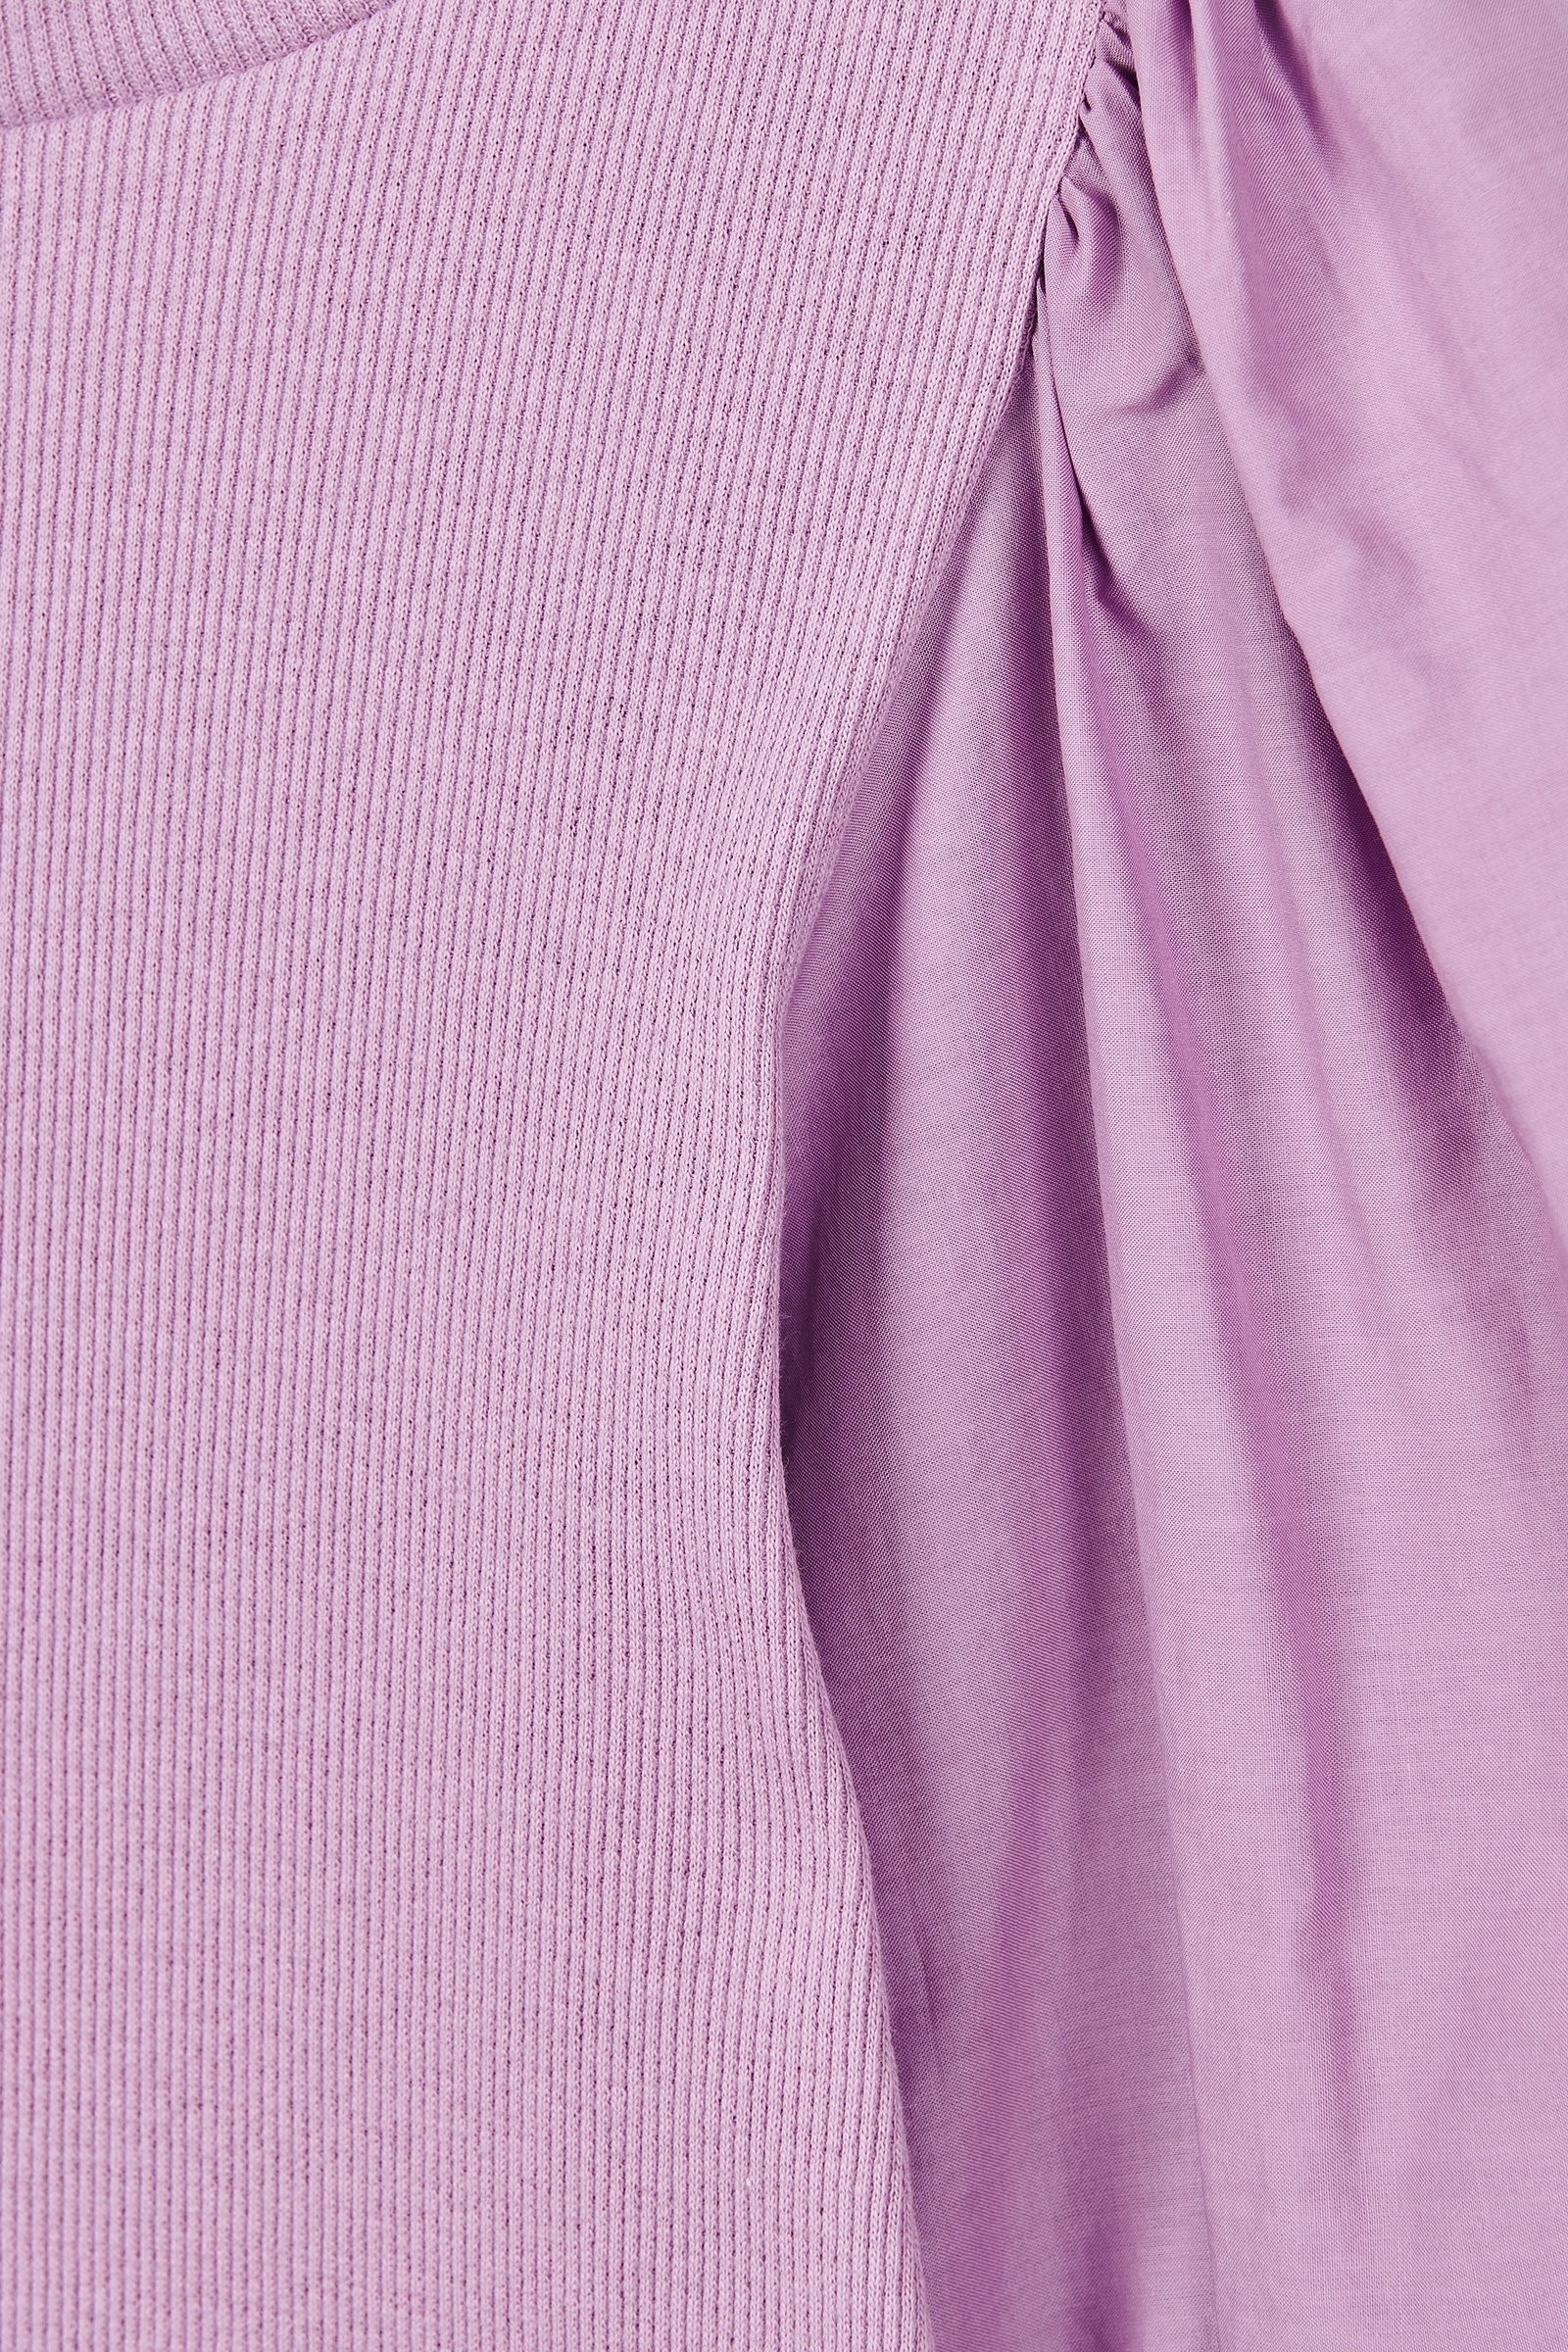 CKS Teens - DOLL - t-shirt à manches trois-quarts - violet